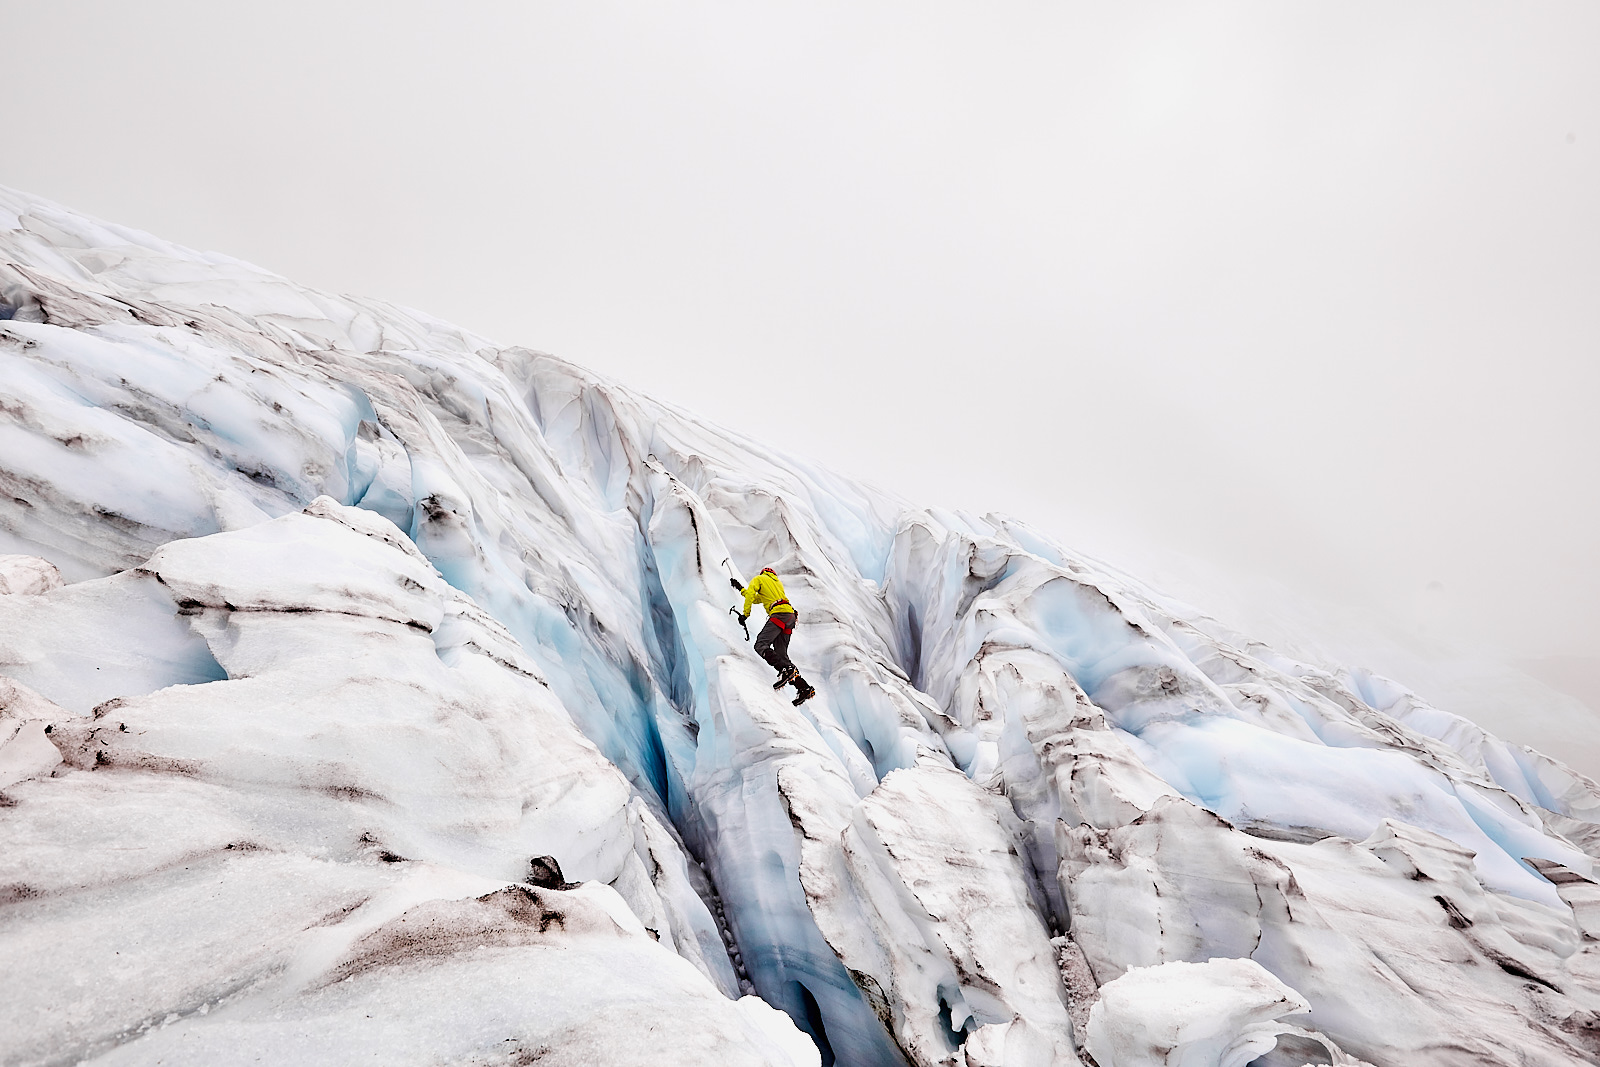 Climbing on the glacier